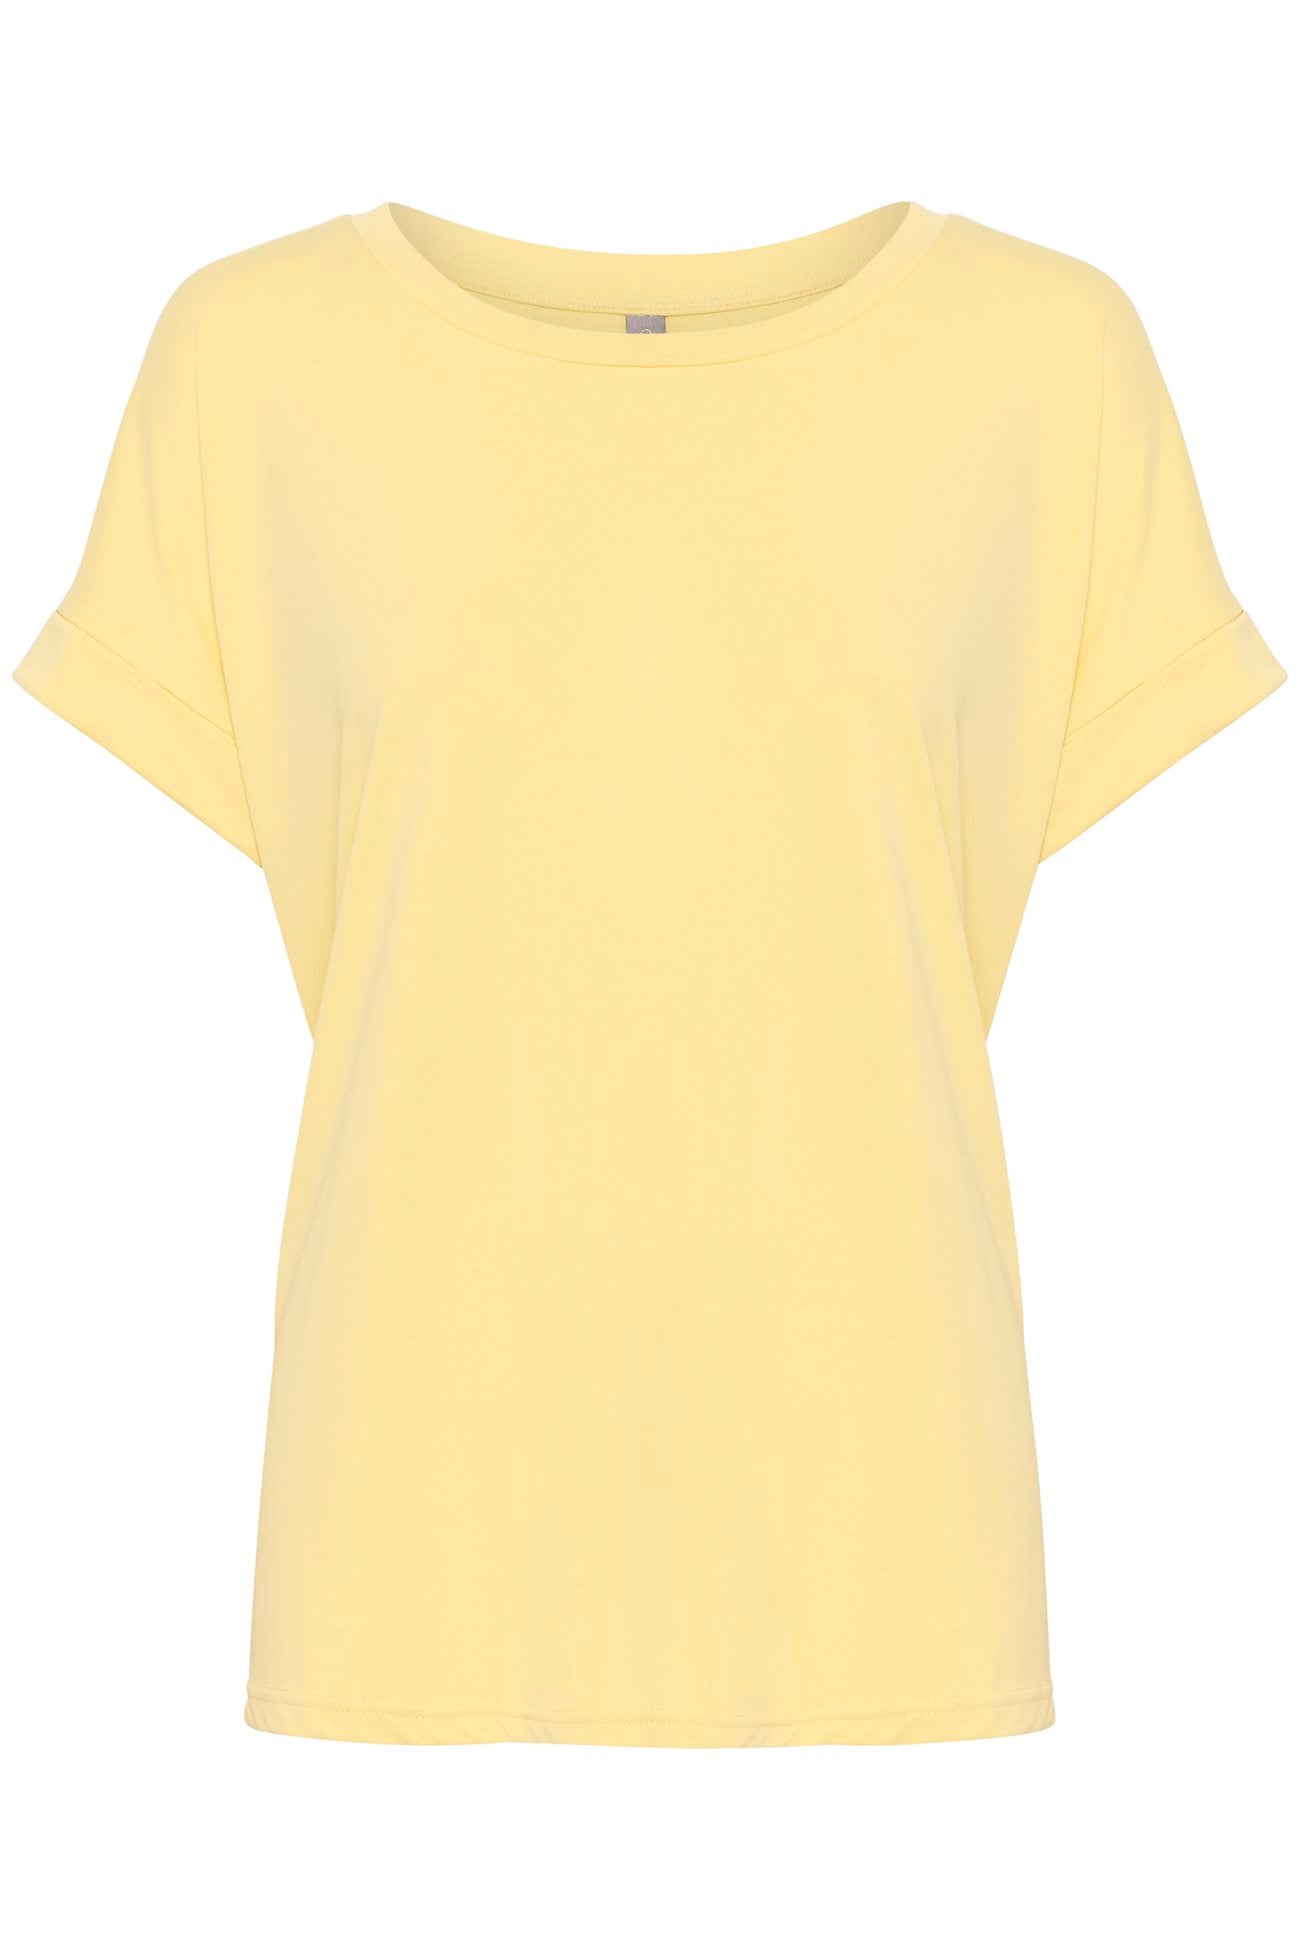 Kajsa T-shirt by Culture - pineapple - Blue Sky Fashions & Lingerie